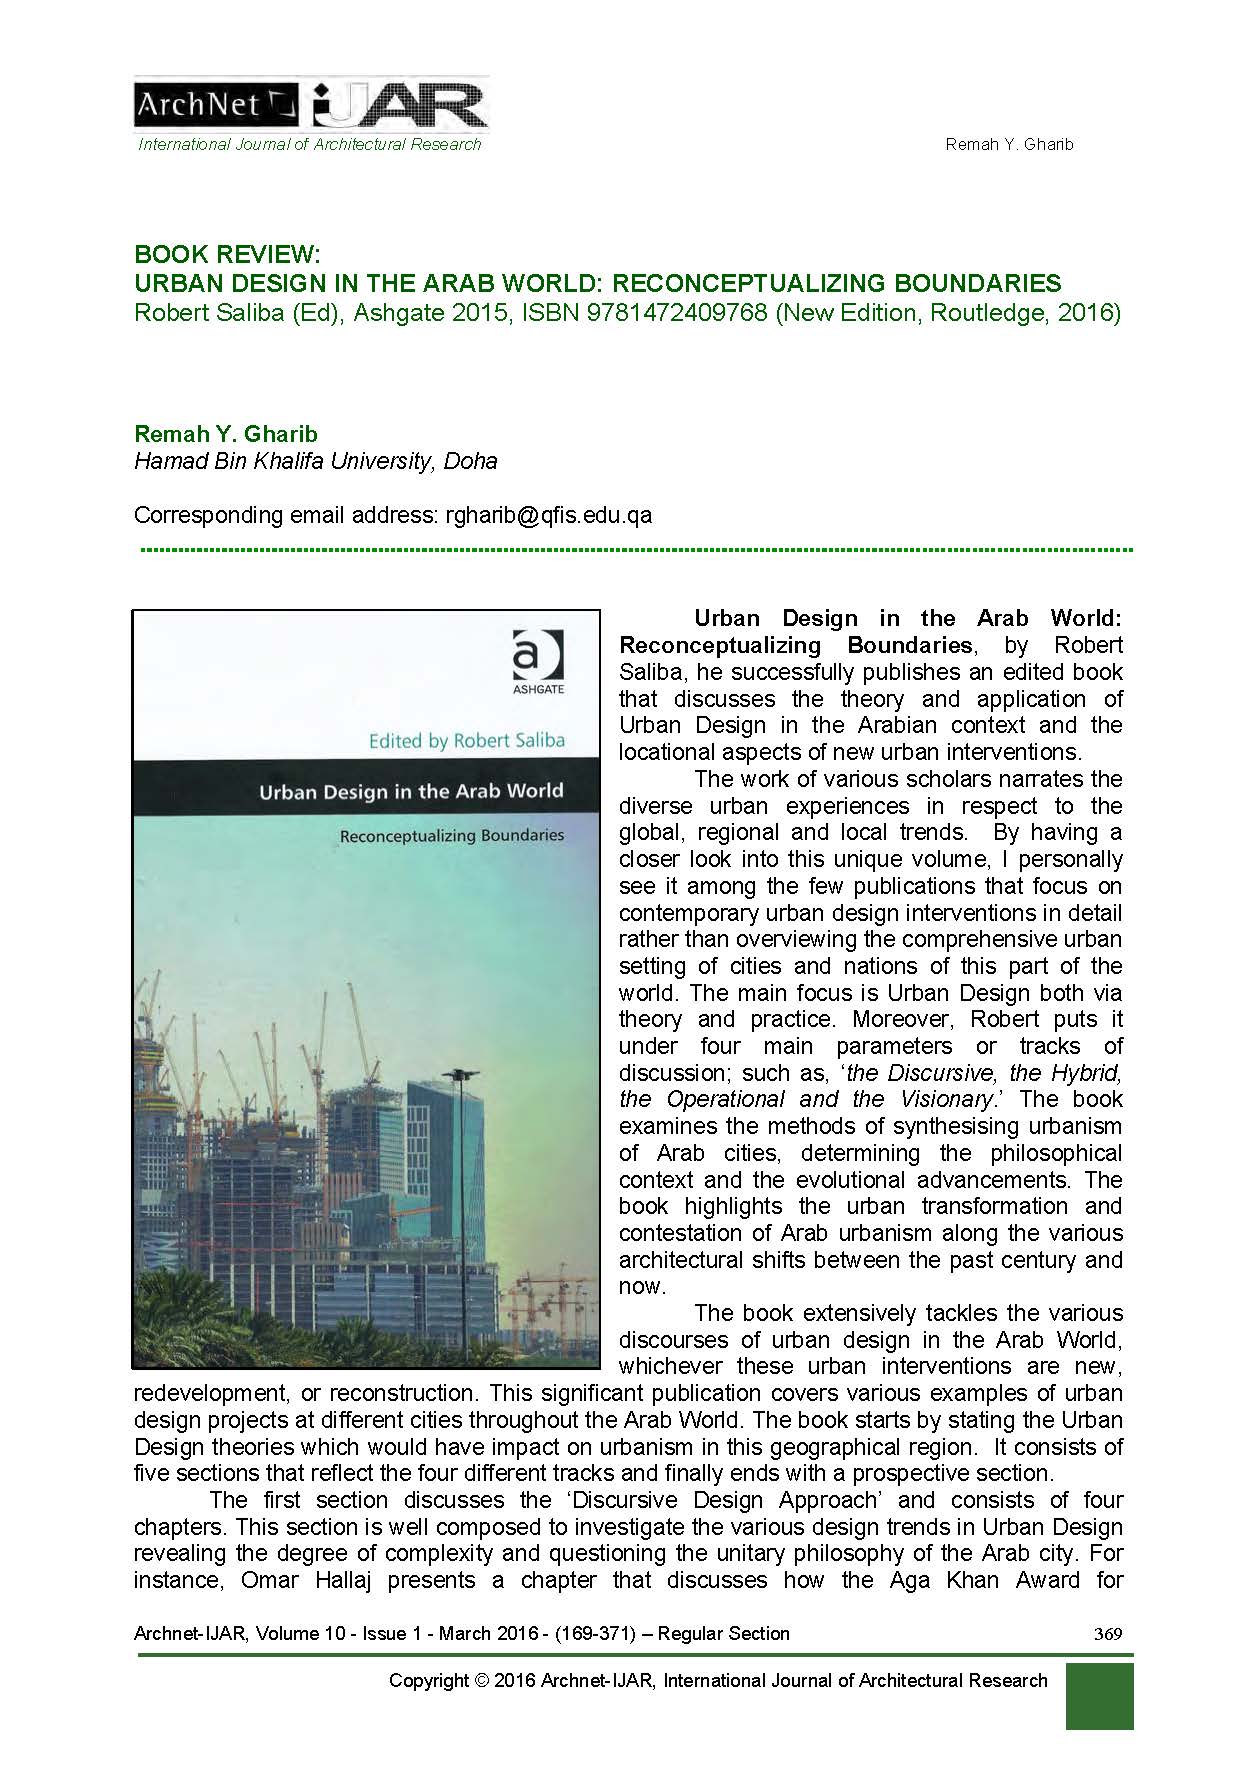 Book Review: Urban Design in the Arab World: Reconceptualizing Boundaries (by Robert Saliba)